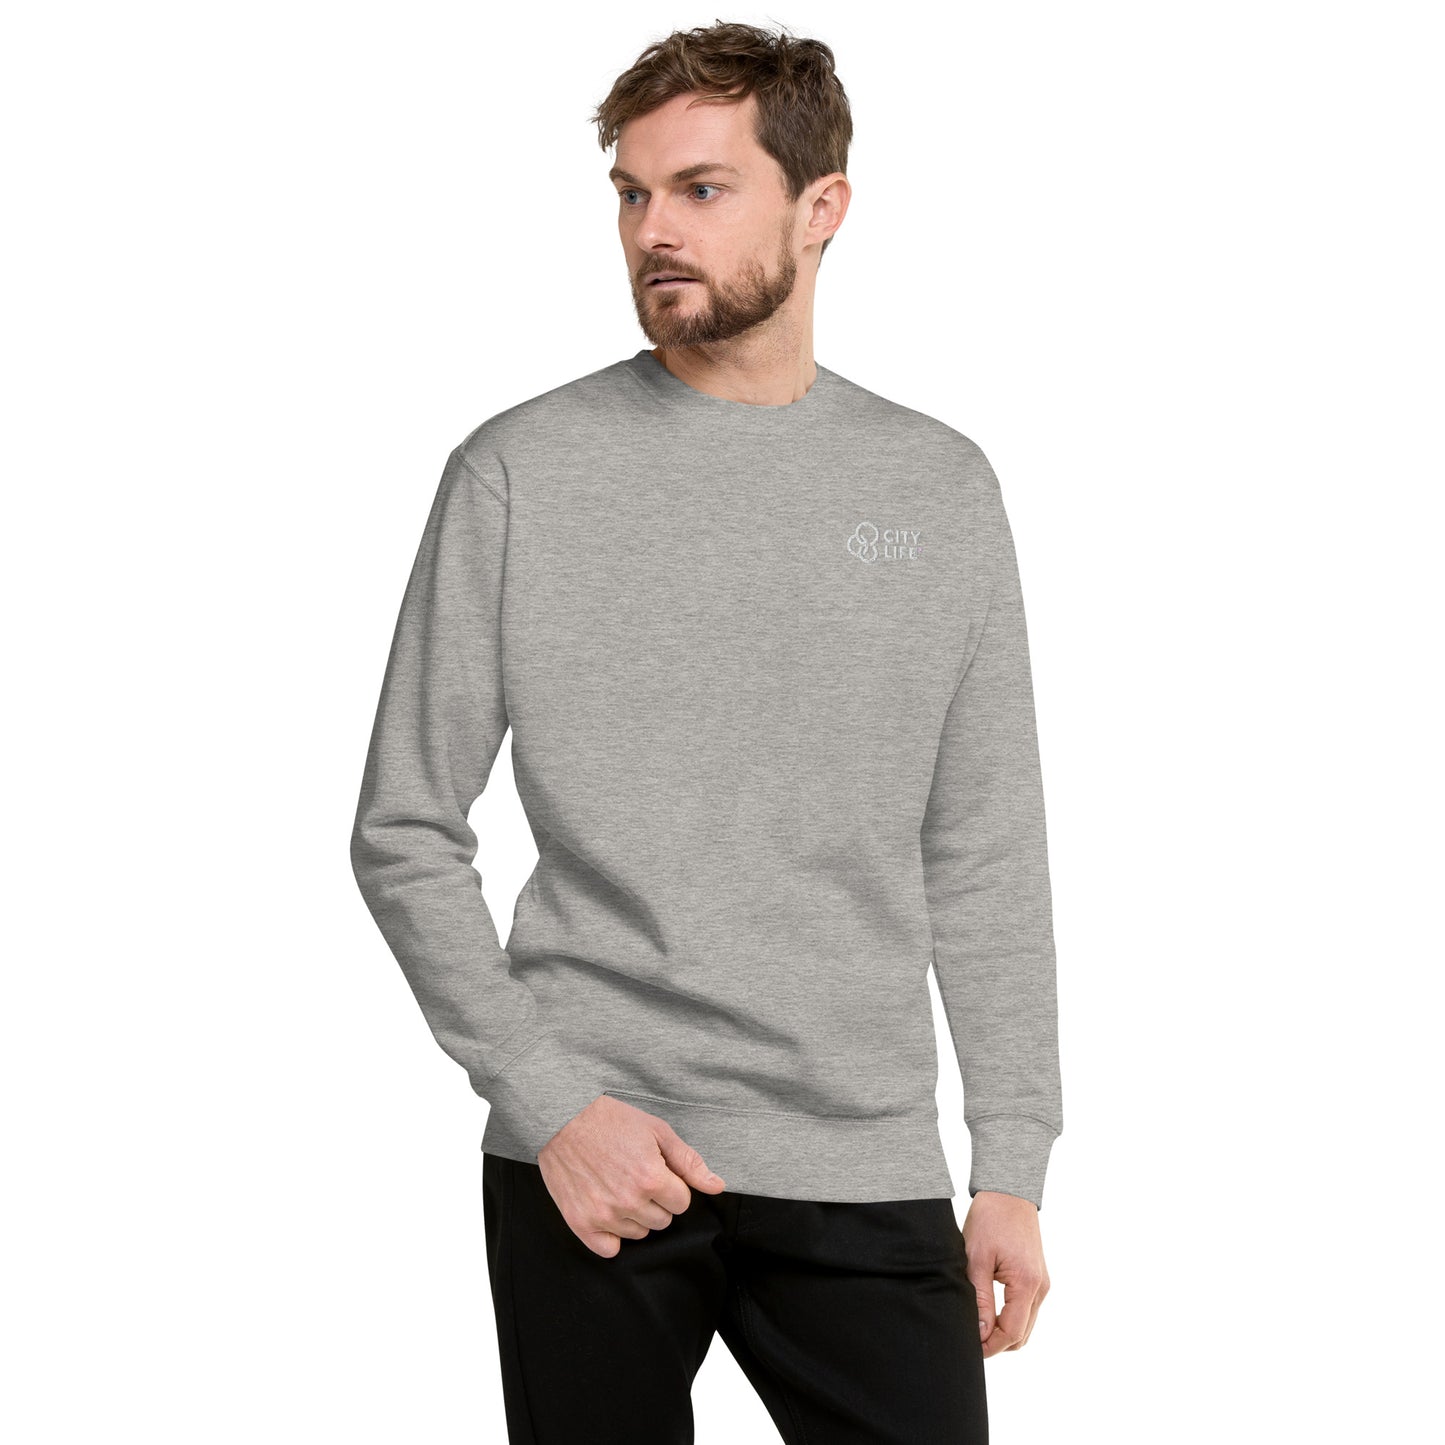 City Life Unisex Premium Sweatshirt